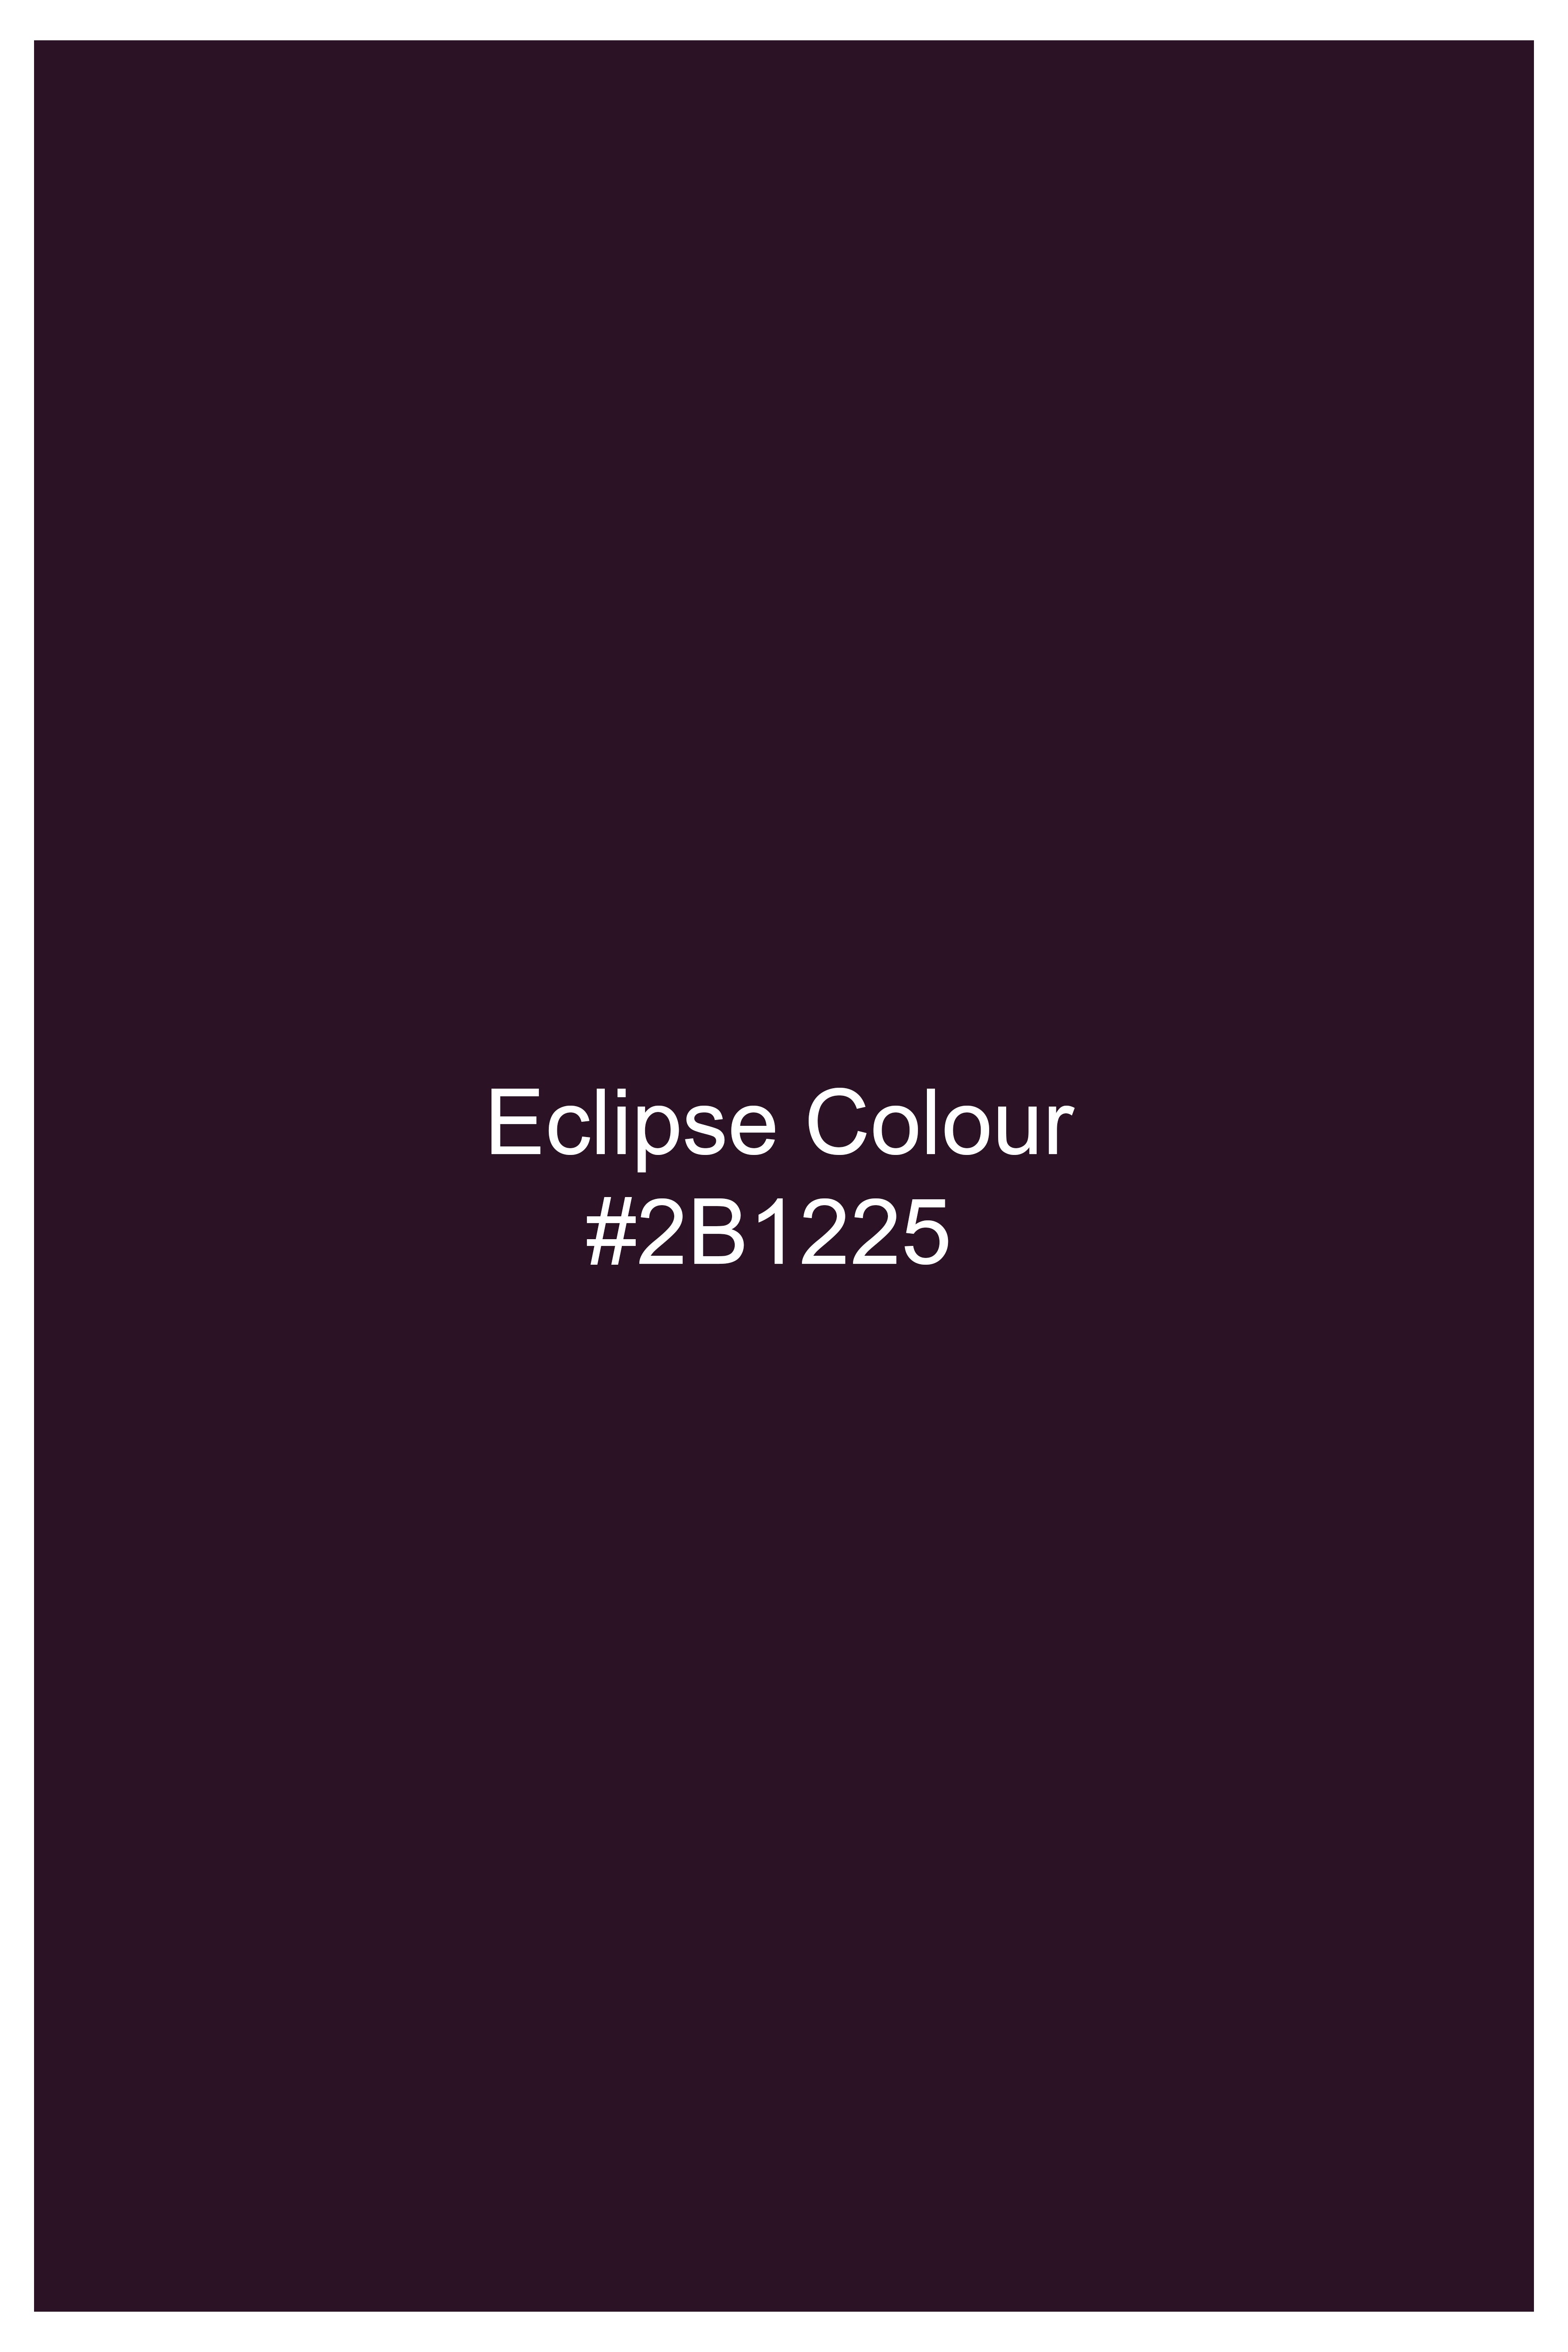 Eclipse Maroon Premium Cotton Bandhgala Designer Blazer BL2757-BG-D16-36, BL2757-BG-D16-38, BL2757-BG-D16-40, BL2757-BG-D16-42, BL2757-BG-D16-44, BL2757-BG-D16-46, BL2757-BG-D16-48, BL2757-BG-D16-50, BL2757-BG-D16-52, BL2757-BG-D16-54, BL2757-BG-D16-56, BL2757-BG-D16-58, BL2757-BG-D16-60